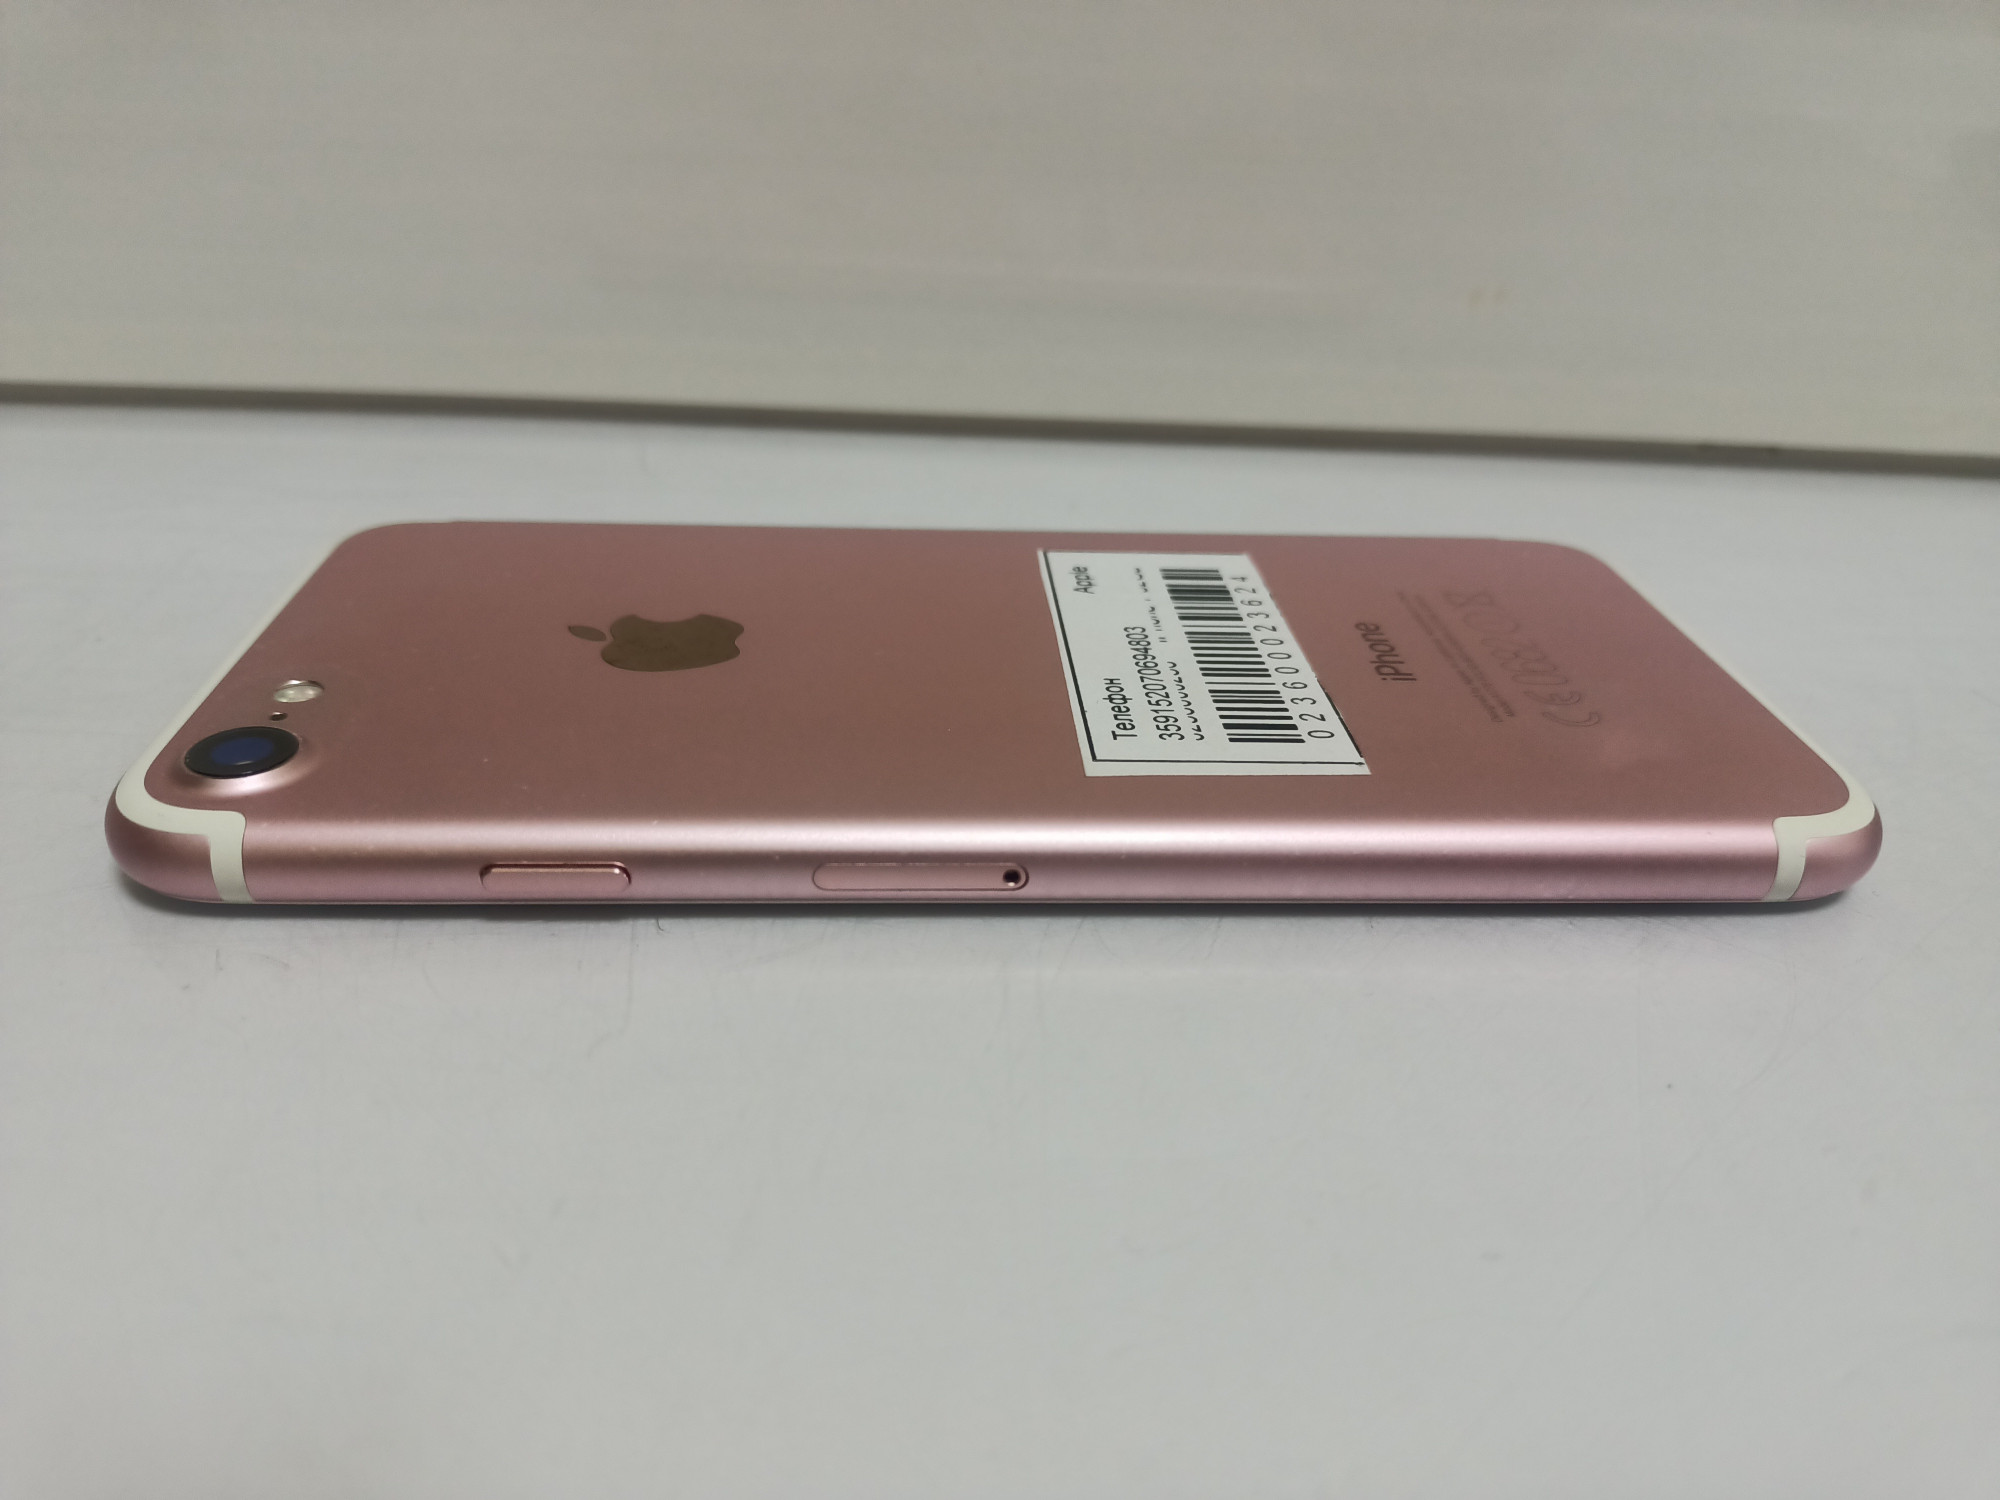 Apple iPhone 7 32Gb Rose Gold 6